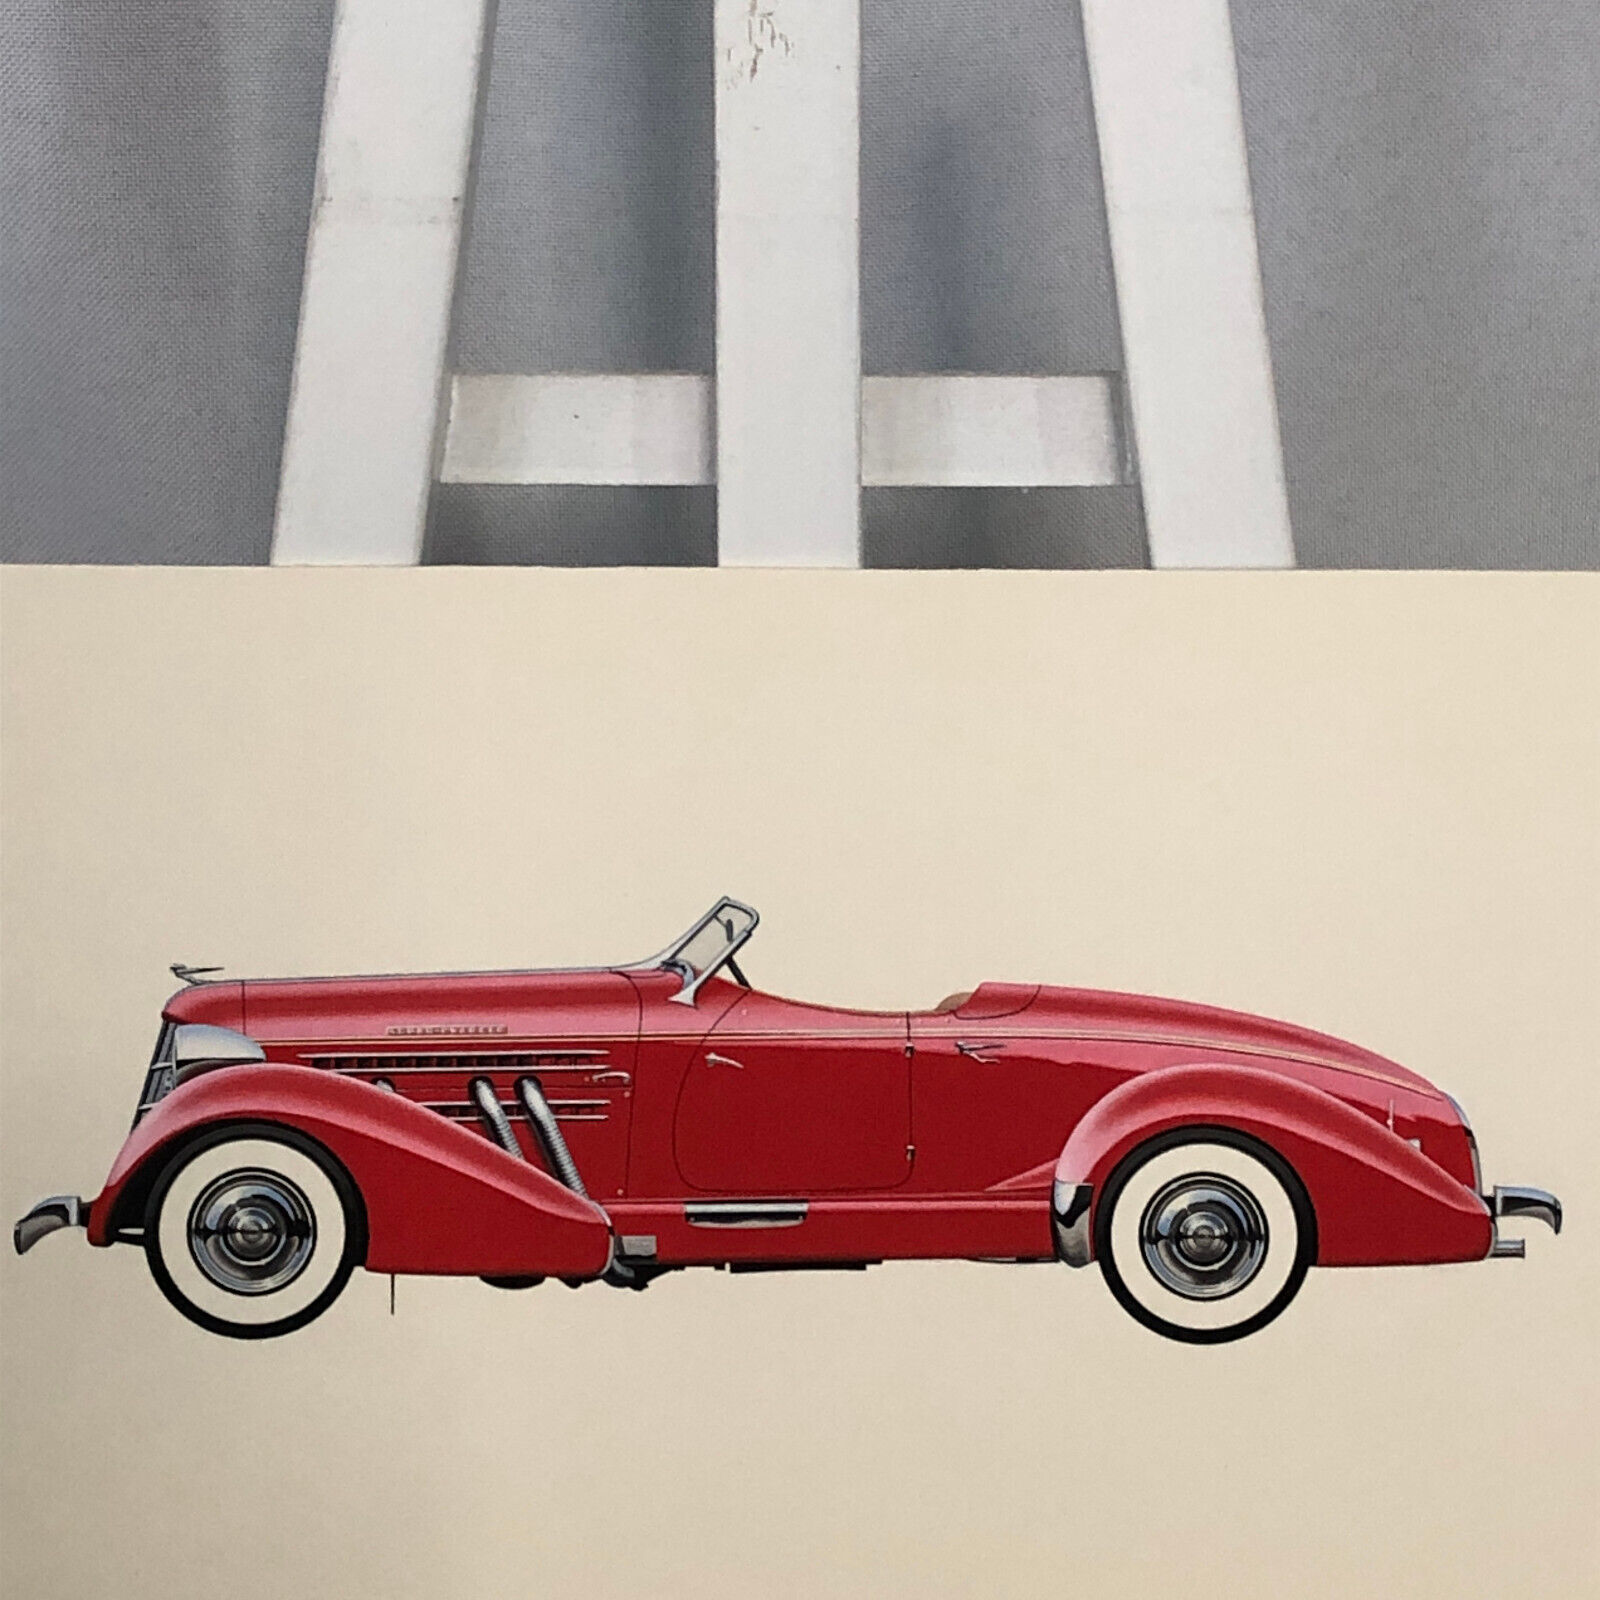 1935 Auburn 851 Speedster Roadster Car Illustration Art Drawing Hand Drawn